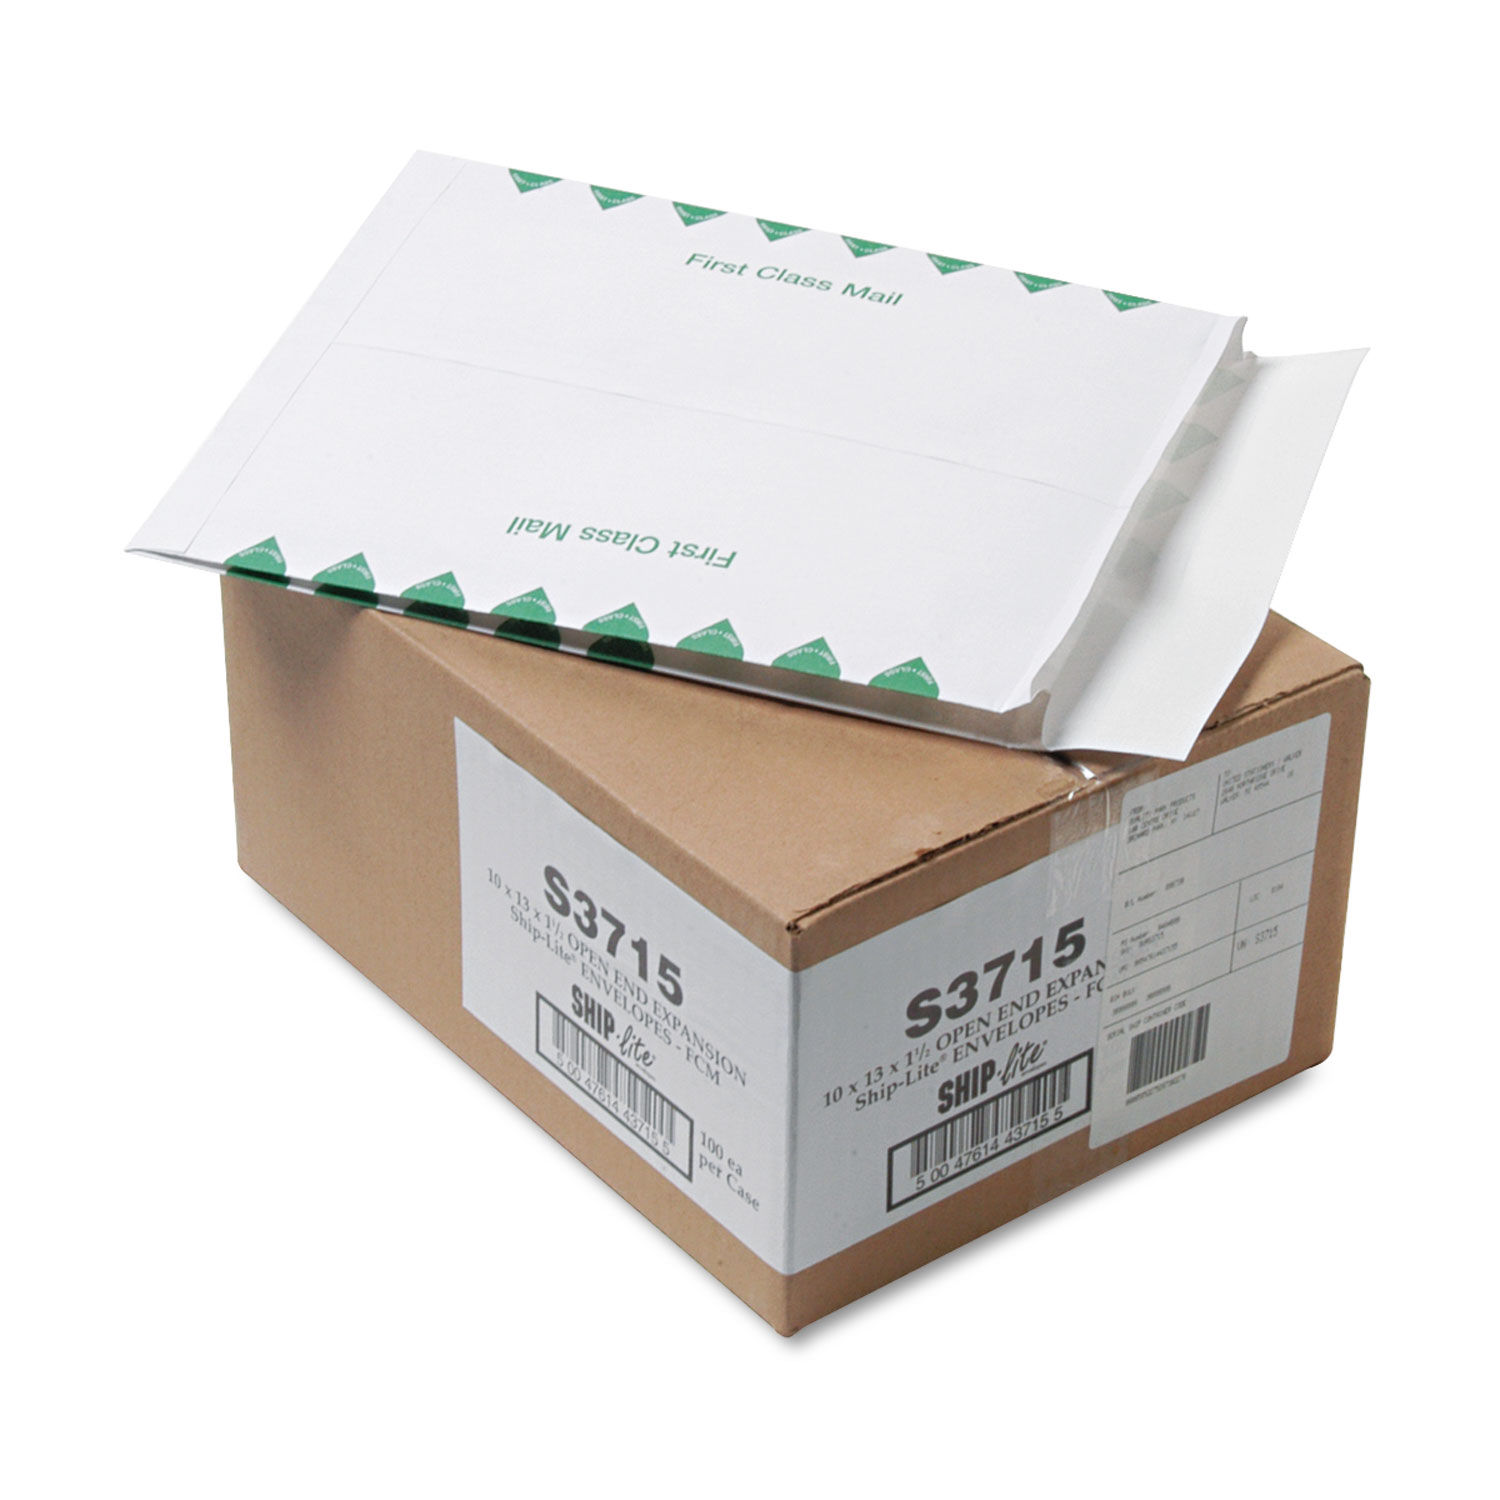 Ship-Lite Expansion Mailer First Class, #13 1/2, Cheese Blade Flap, Redi-Strip Adhesive Closure, 10 x 13, White, 100/Box